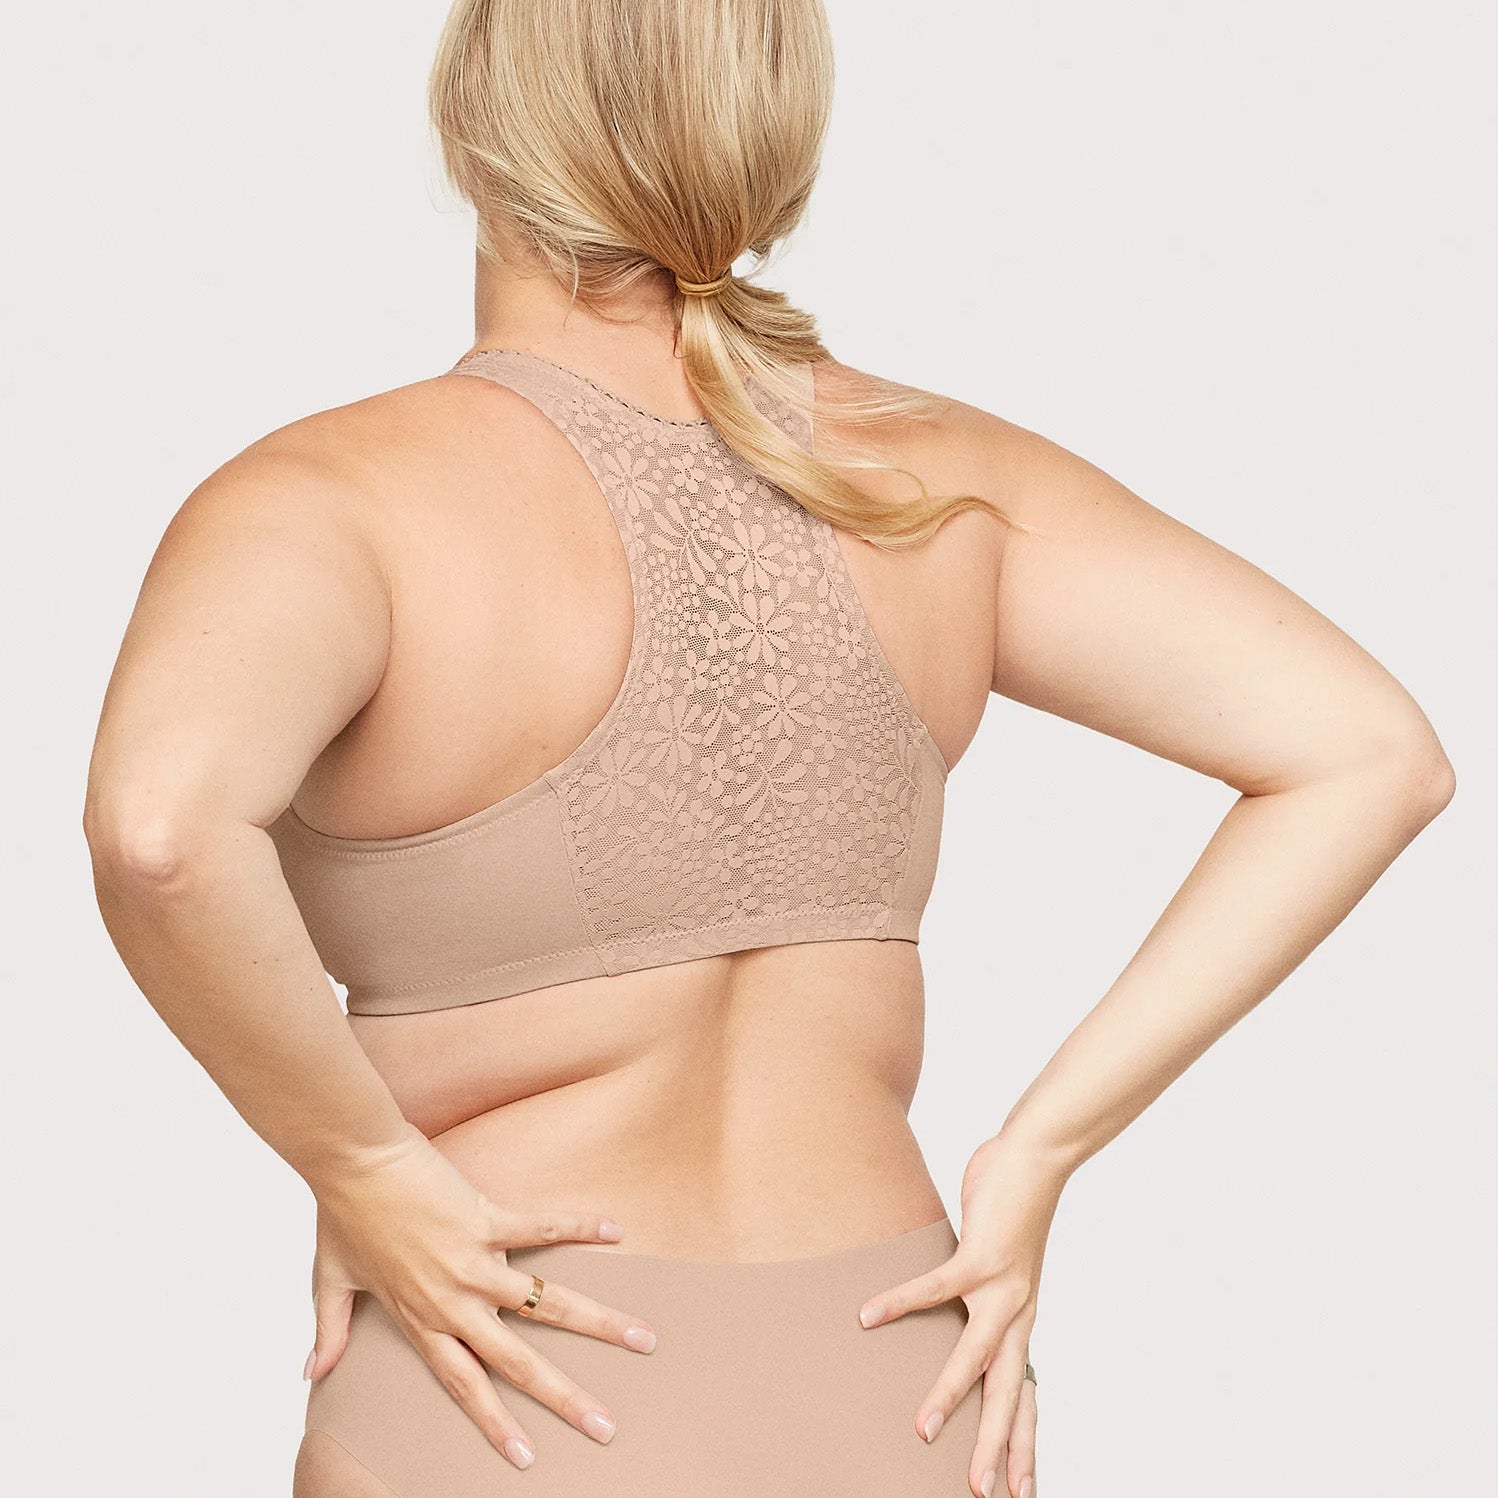 Can A Bra Ease Back Pain – DeBra's